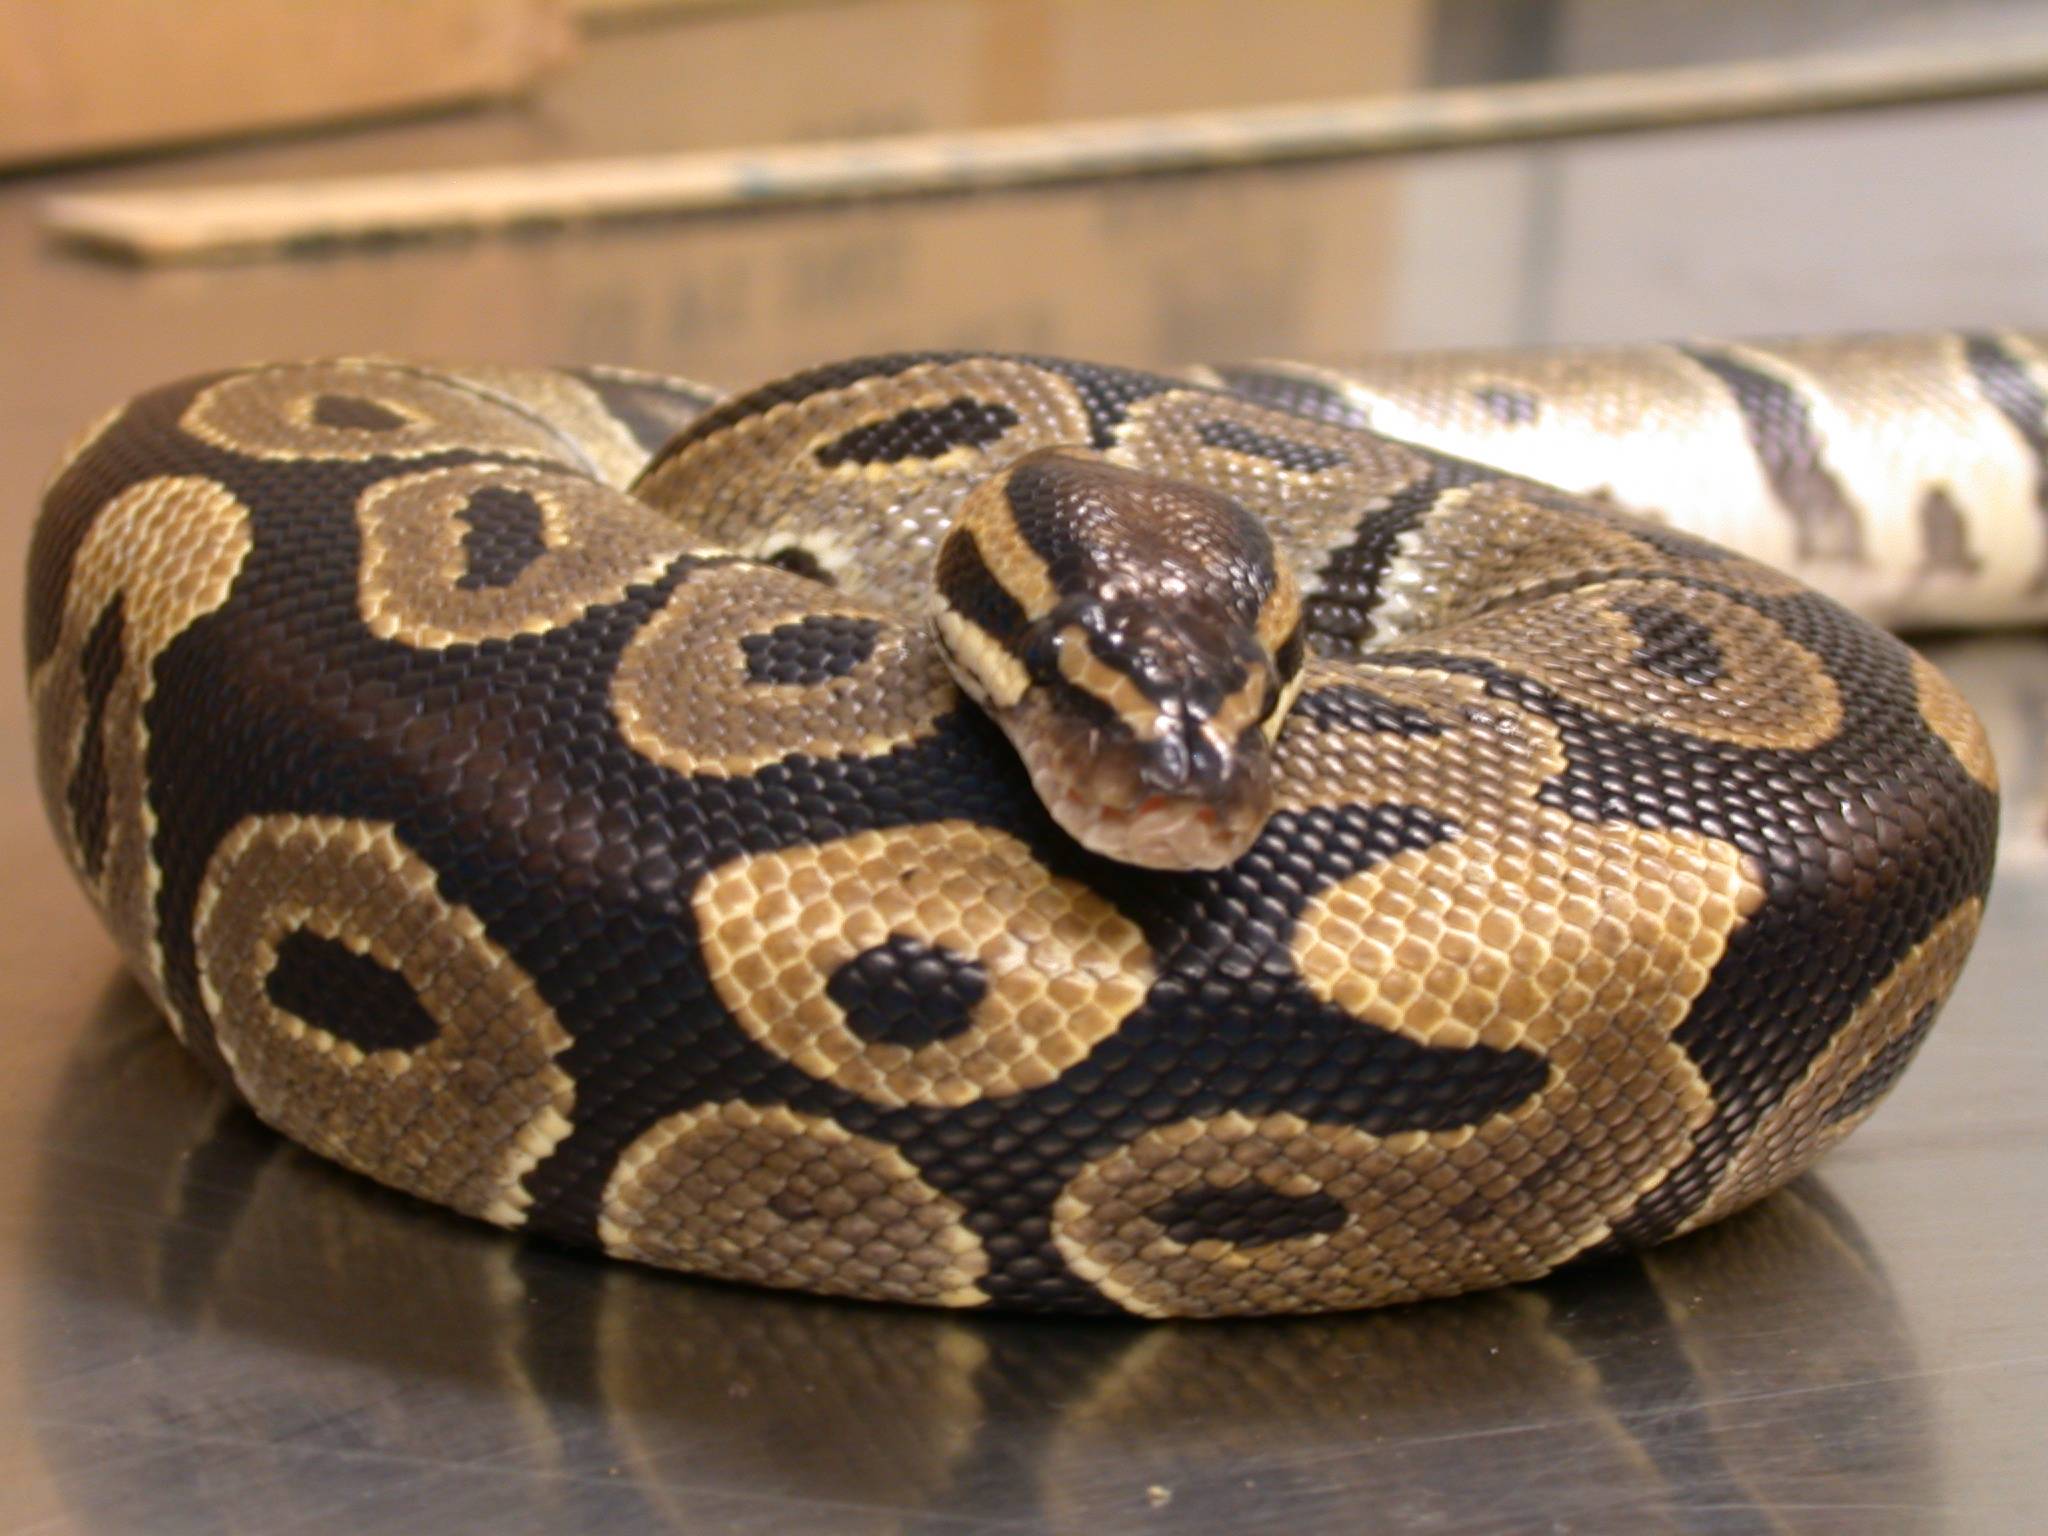 Ball Python!, Ball pythons are generally considered the easiest snakes 1259 - Ball Python Wallpaper